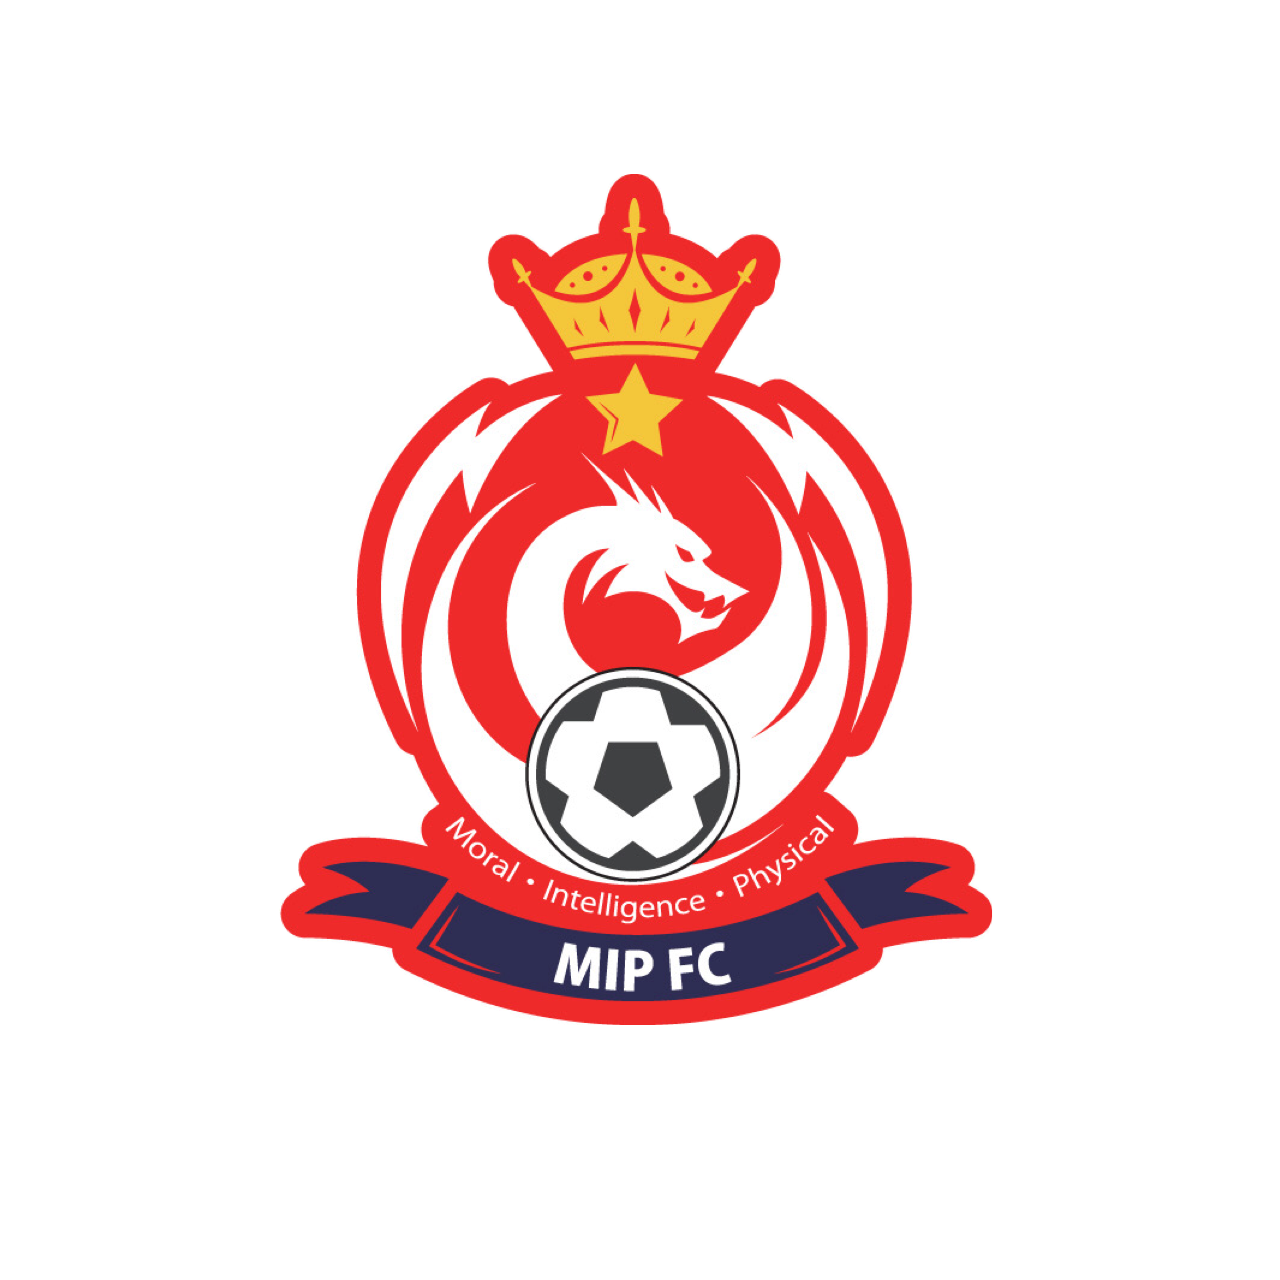 MIP FC